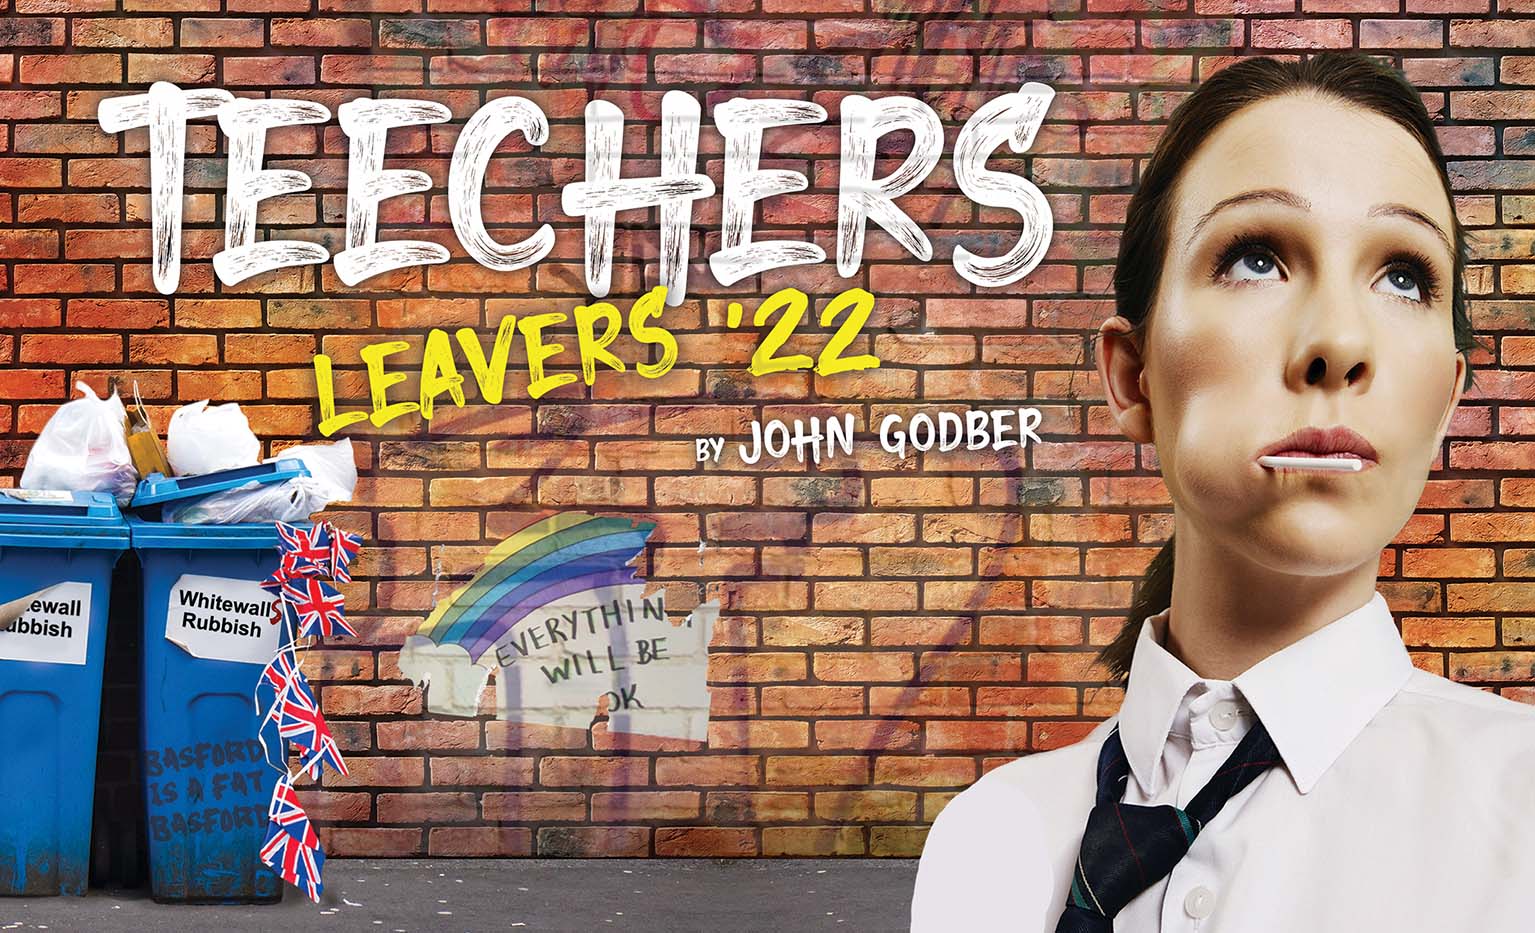 teechers leavers 22 tour